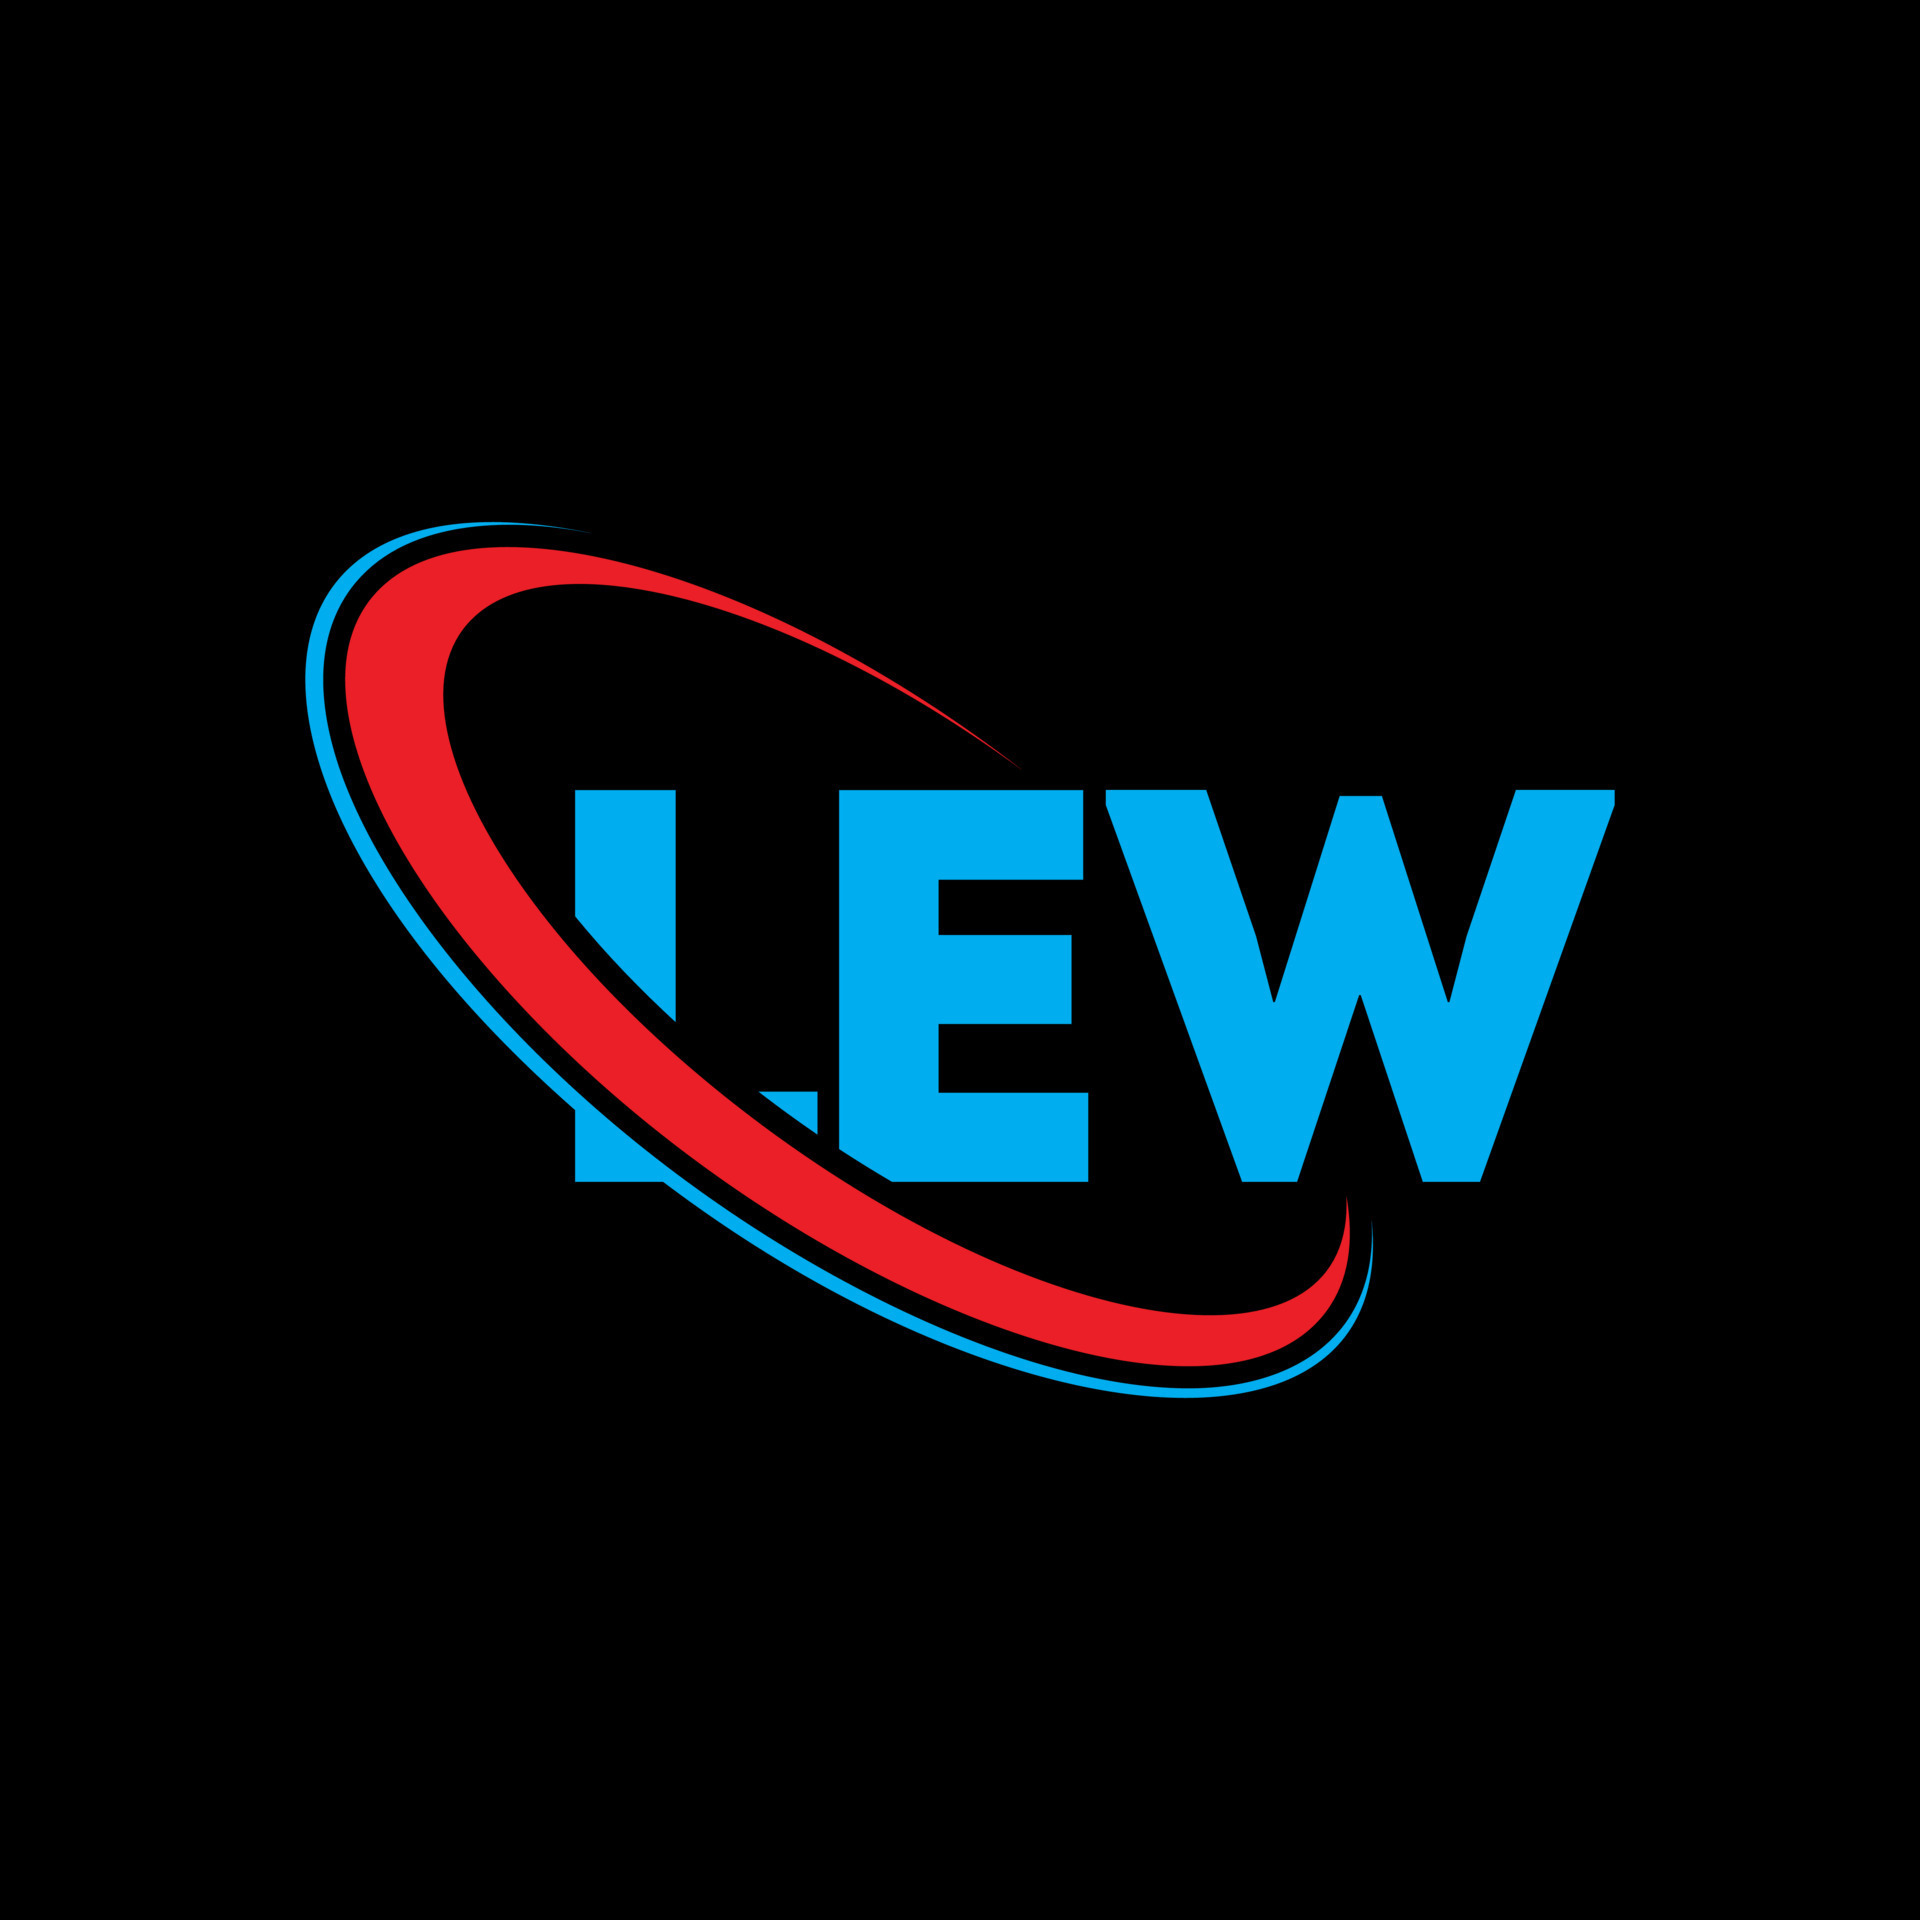 LEW logo. LEW letter. LEW letter logo design. Initials LEW logo